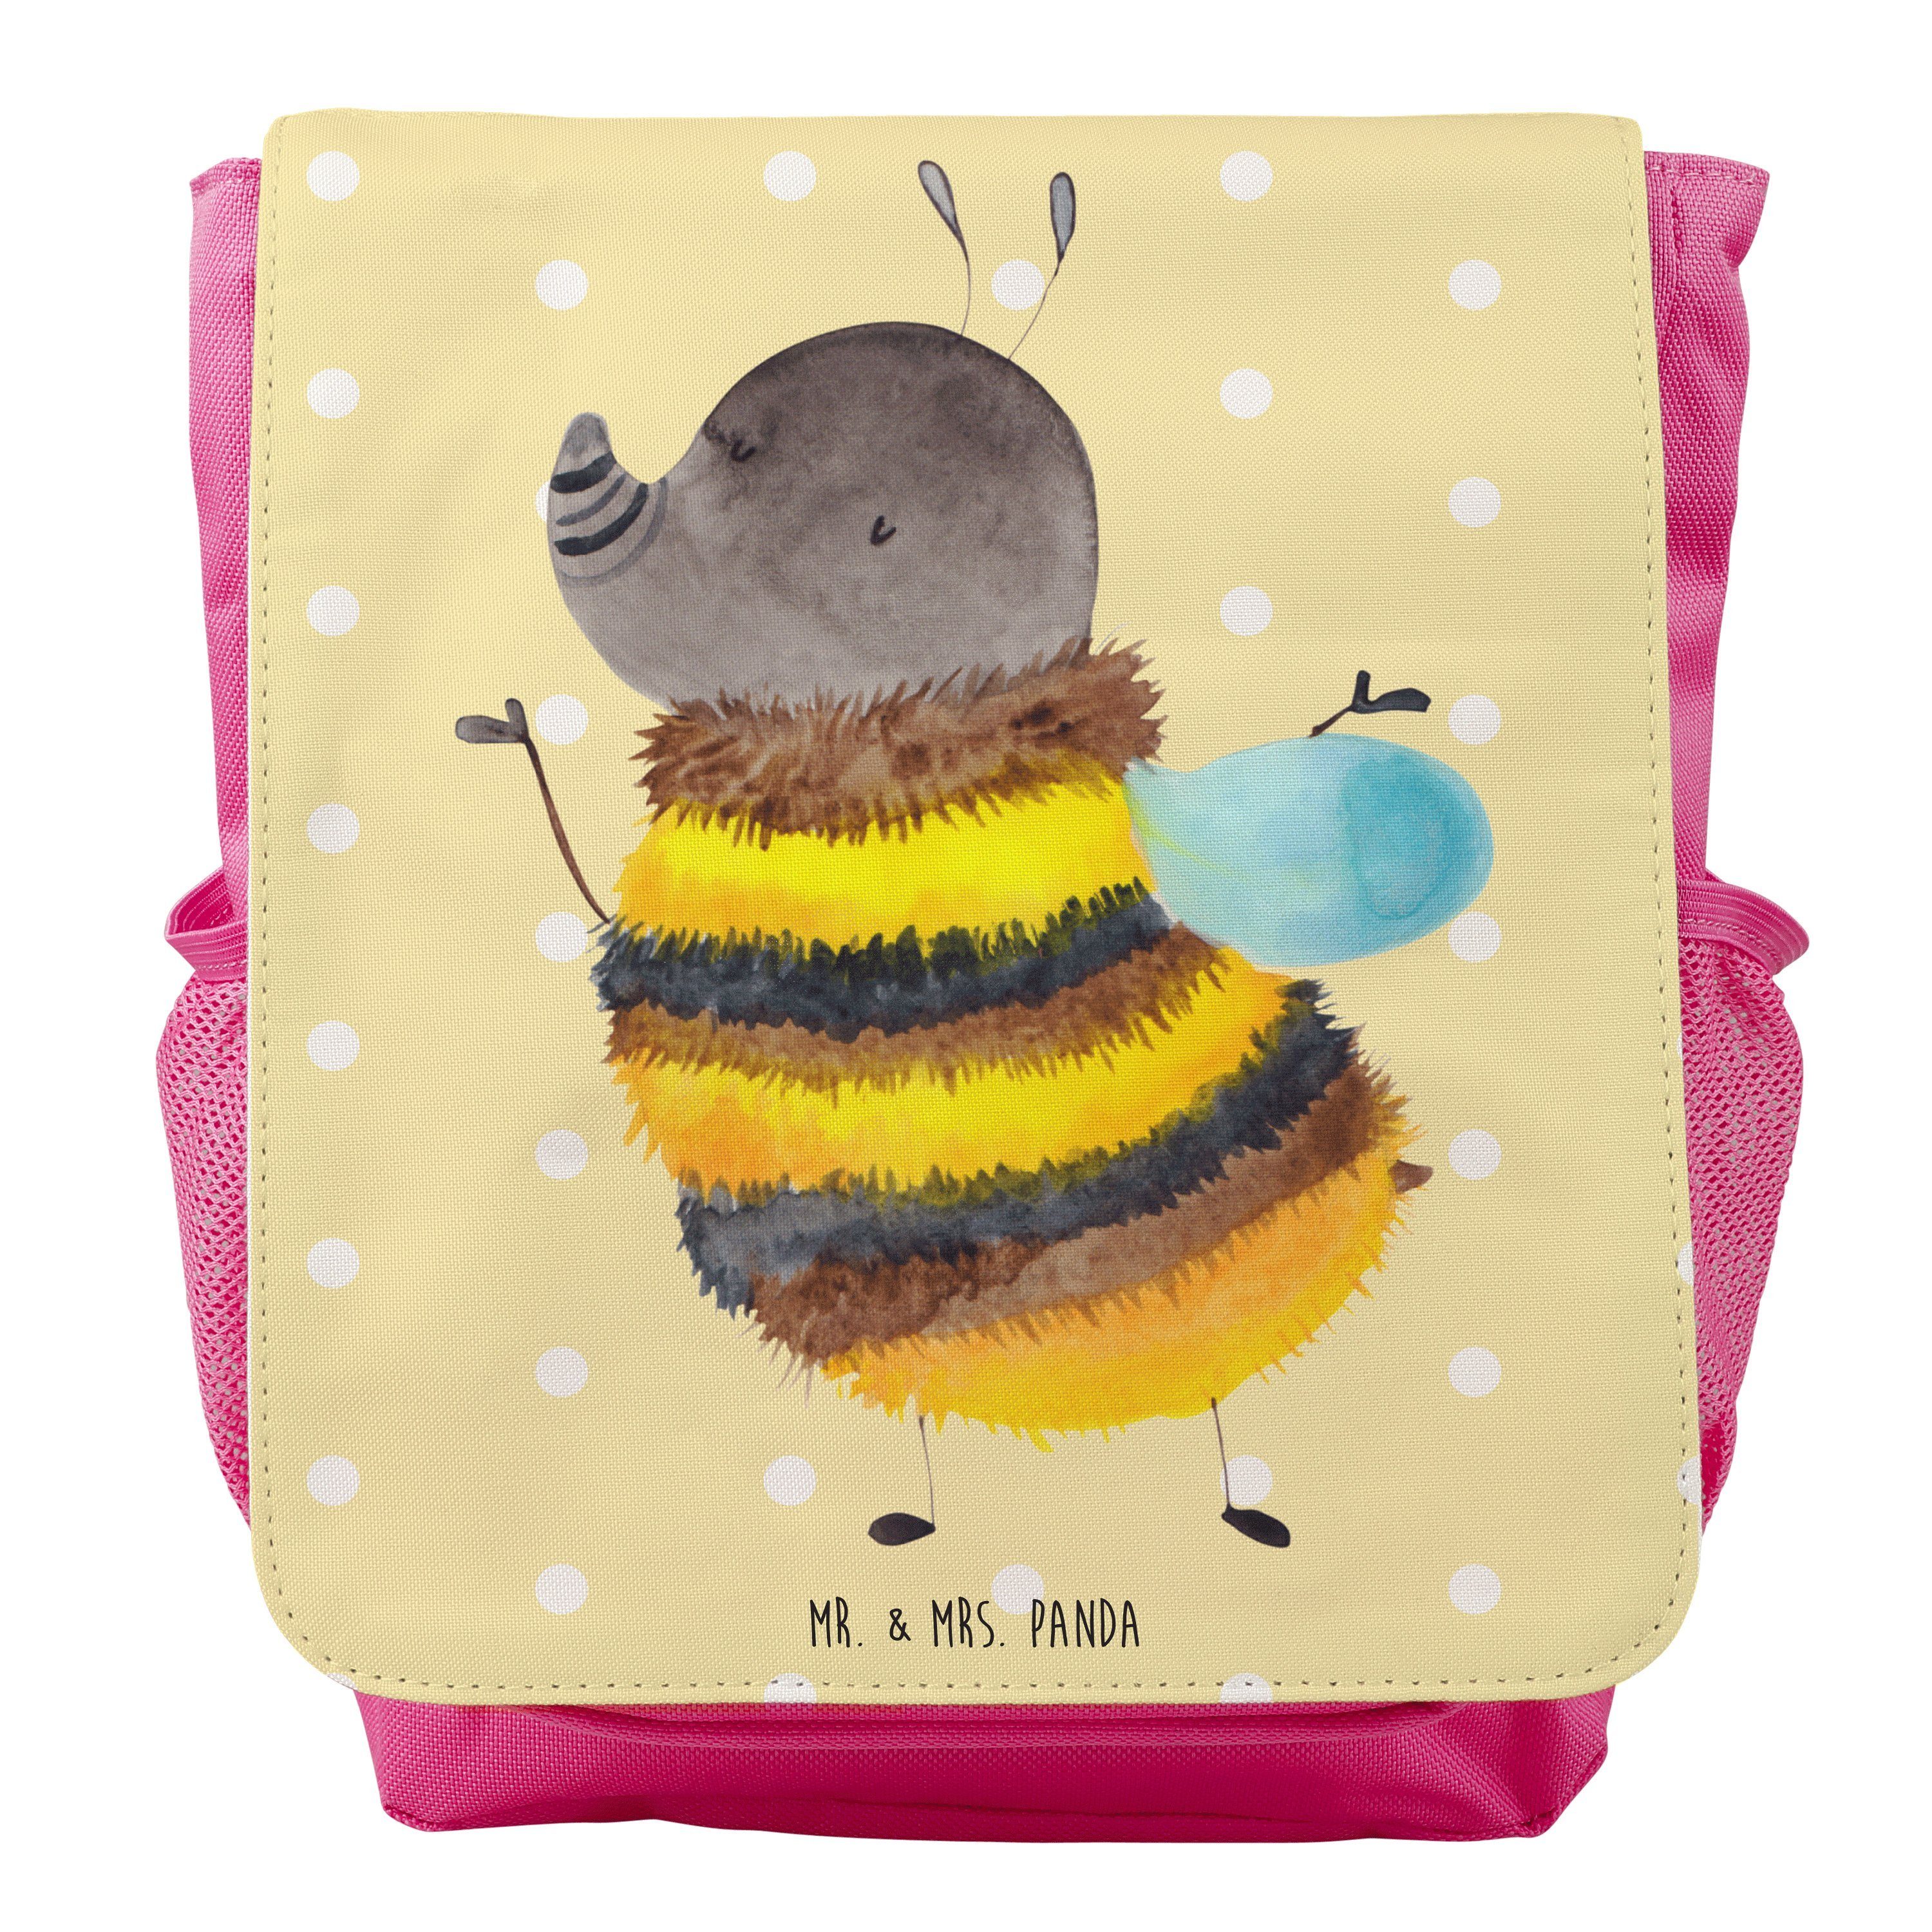 Mr. & Mrs. Panda Kinderrucksack Mädchen Hummel flauschig - Gelb Pastell - Geschenk, Kinder Rucksack | Rucksäcke